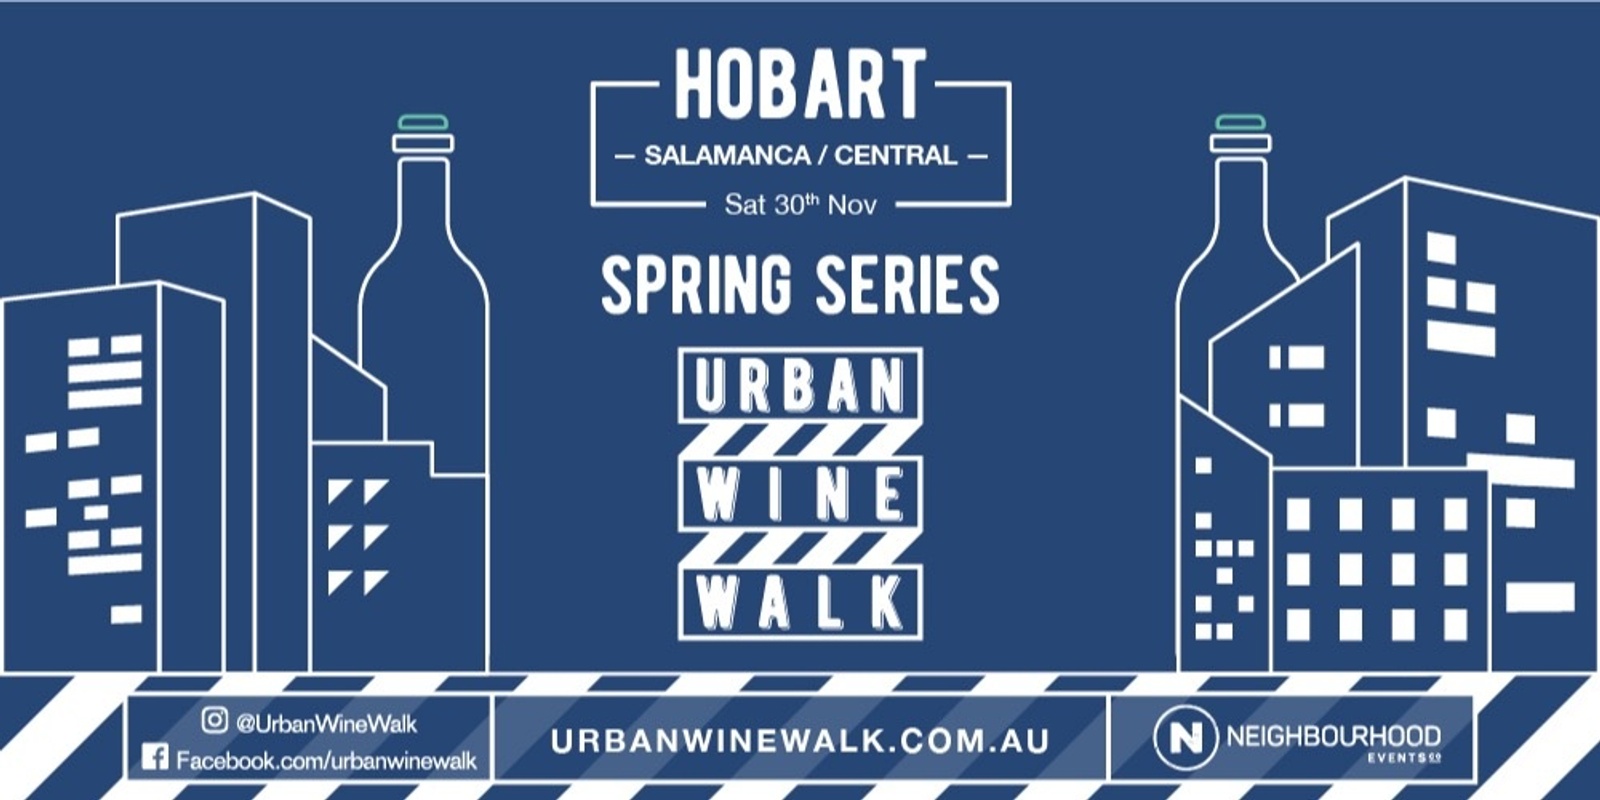 Banner image for Urban Wine Walk Hobart (Salamanca / Central)